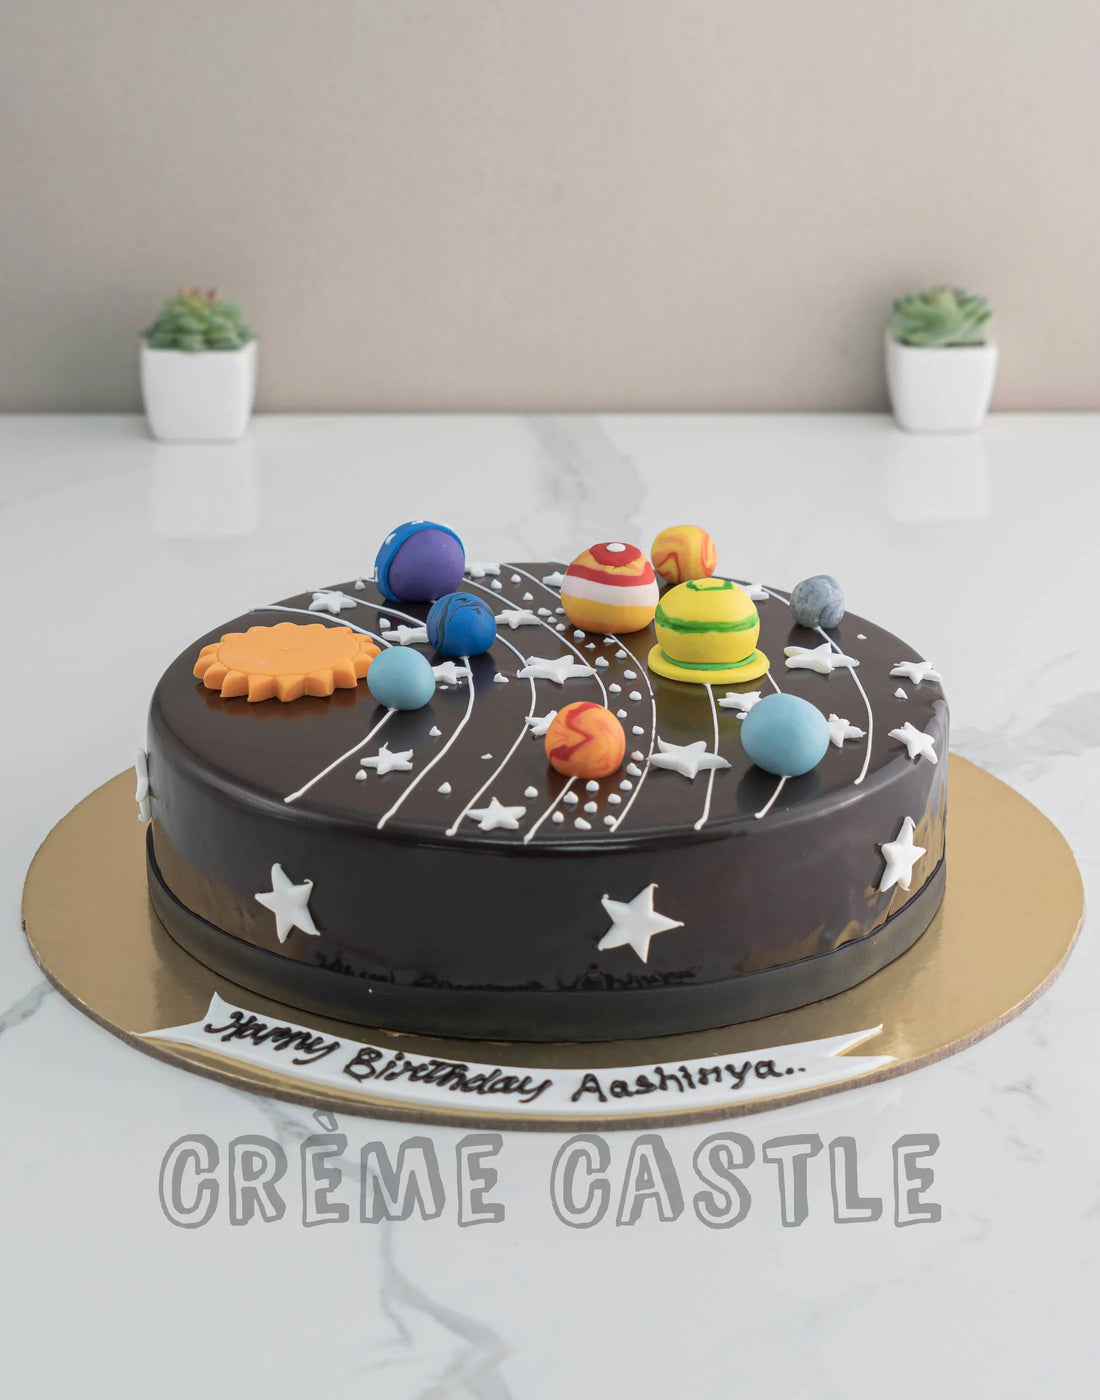 Solar System Theme Cake - Birthday Cake Designs for Year Old Boy ...